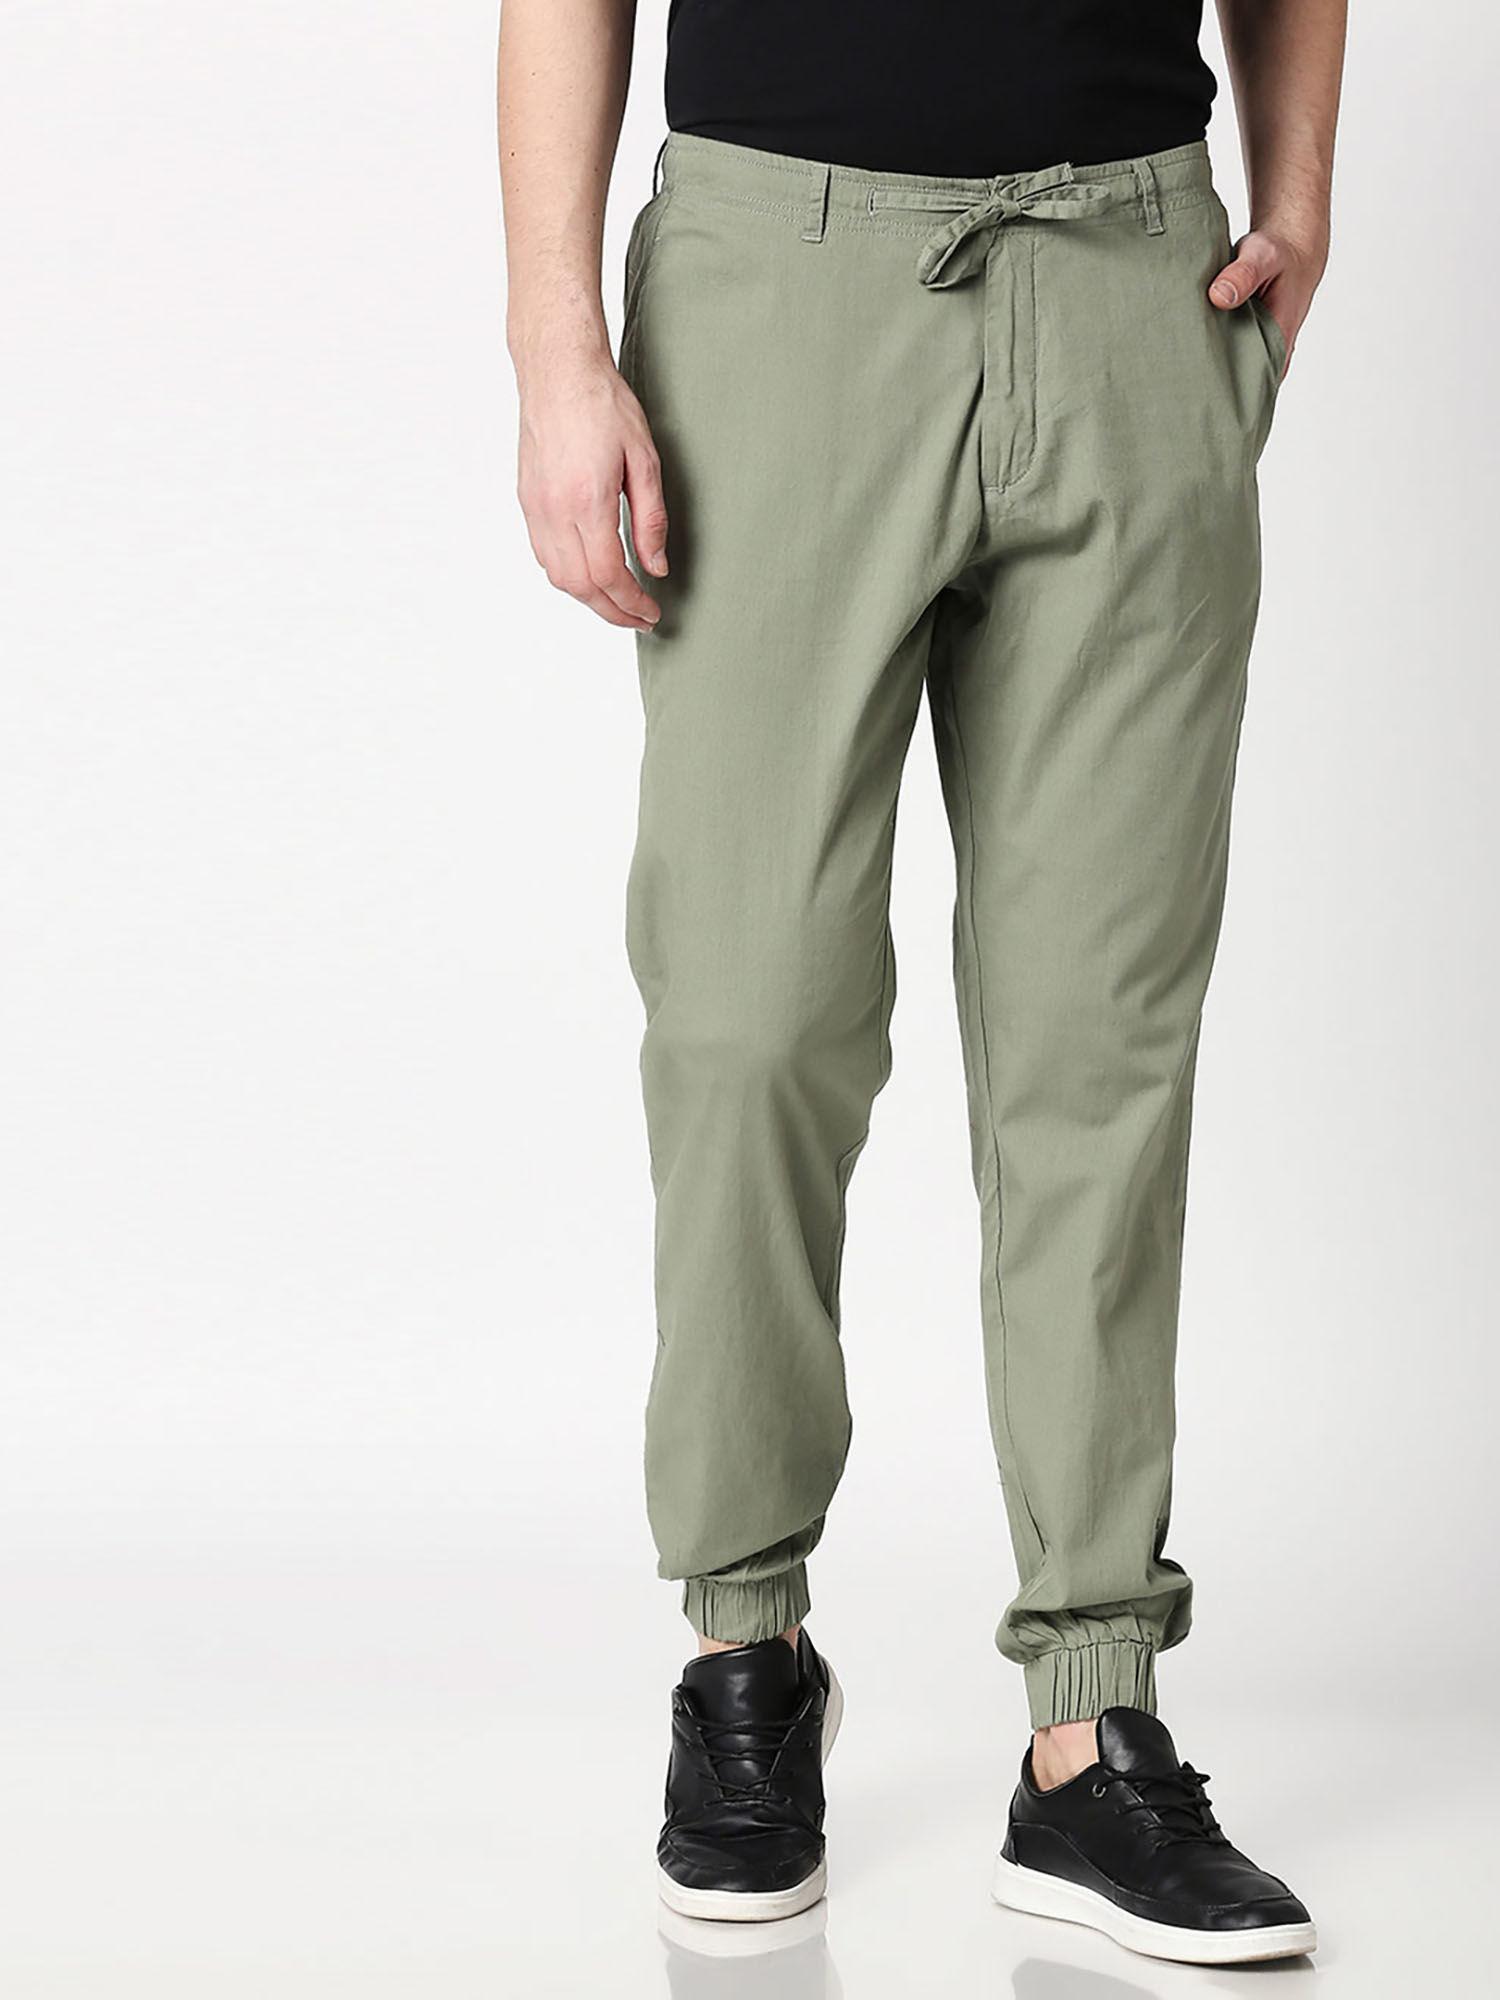 sage green cotton trouser